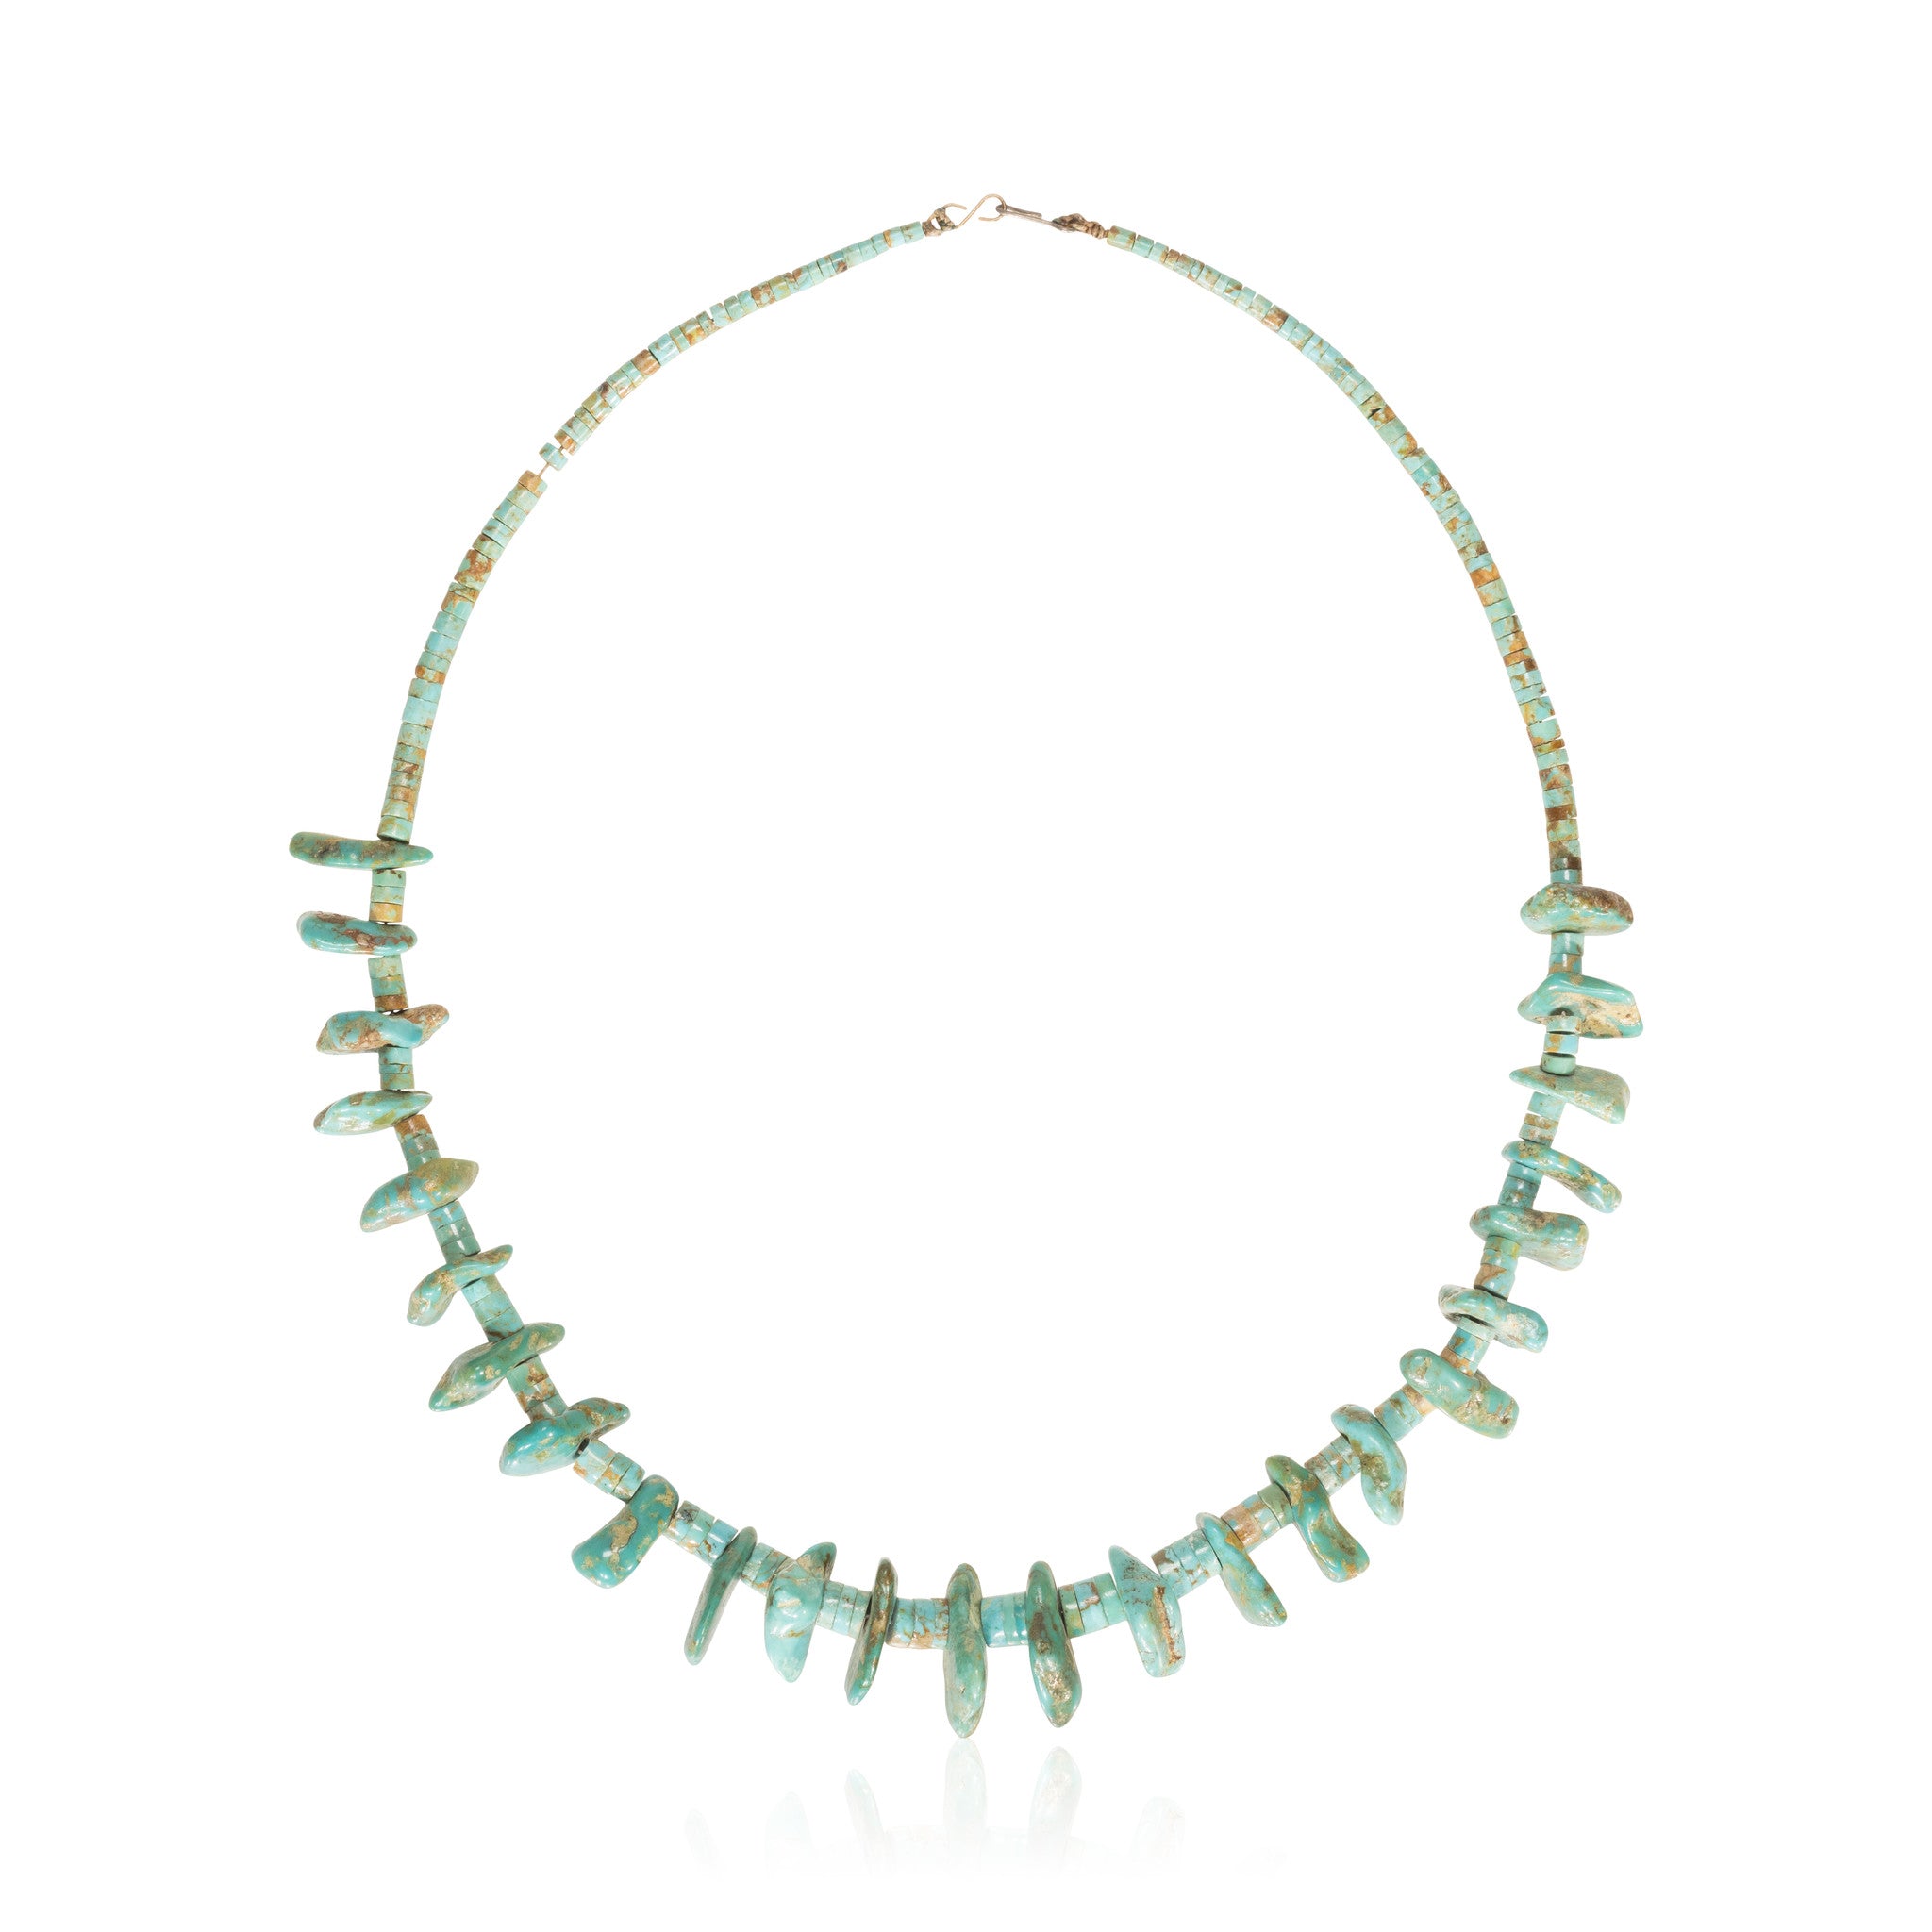 Damele Turquoise Beaded Necklace, Jewelry, Necklace, Native